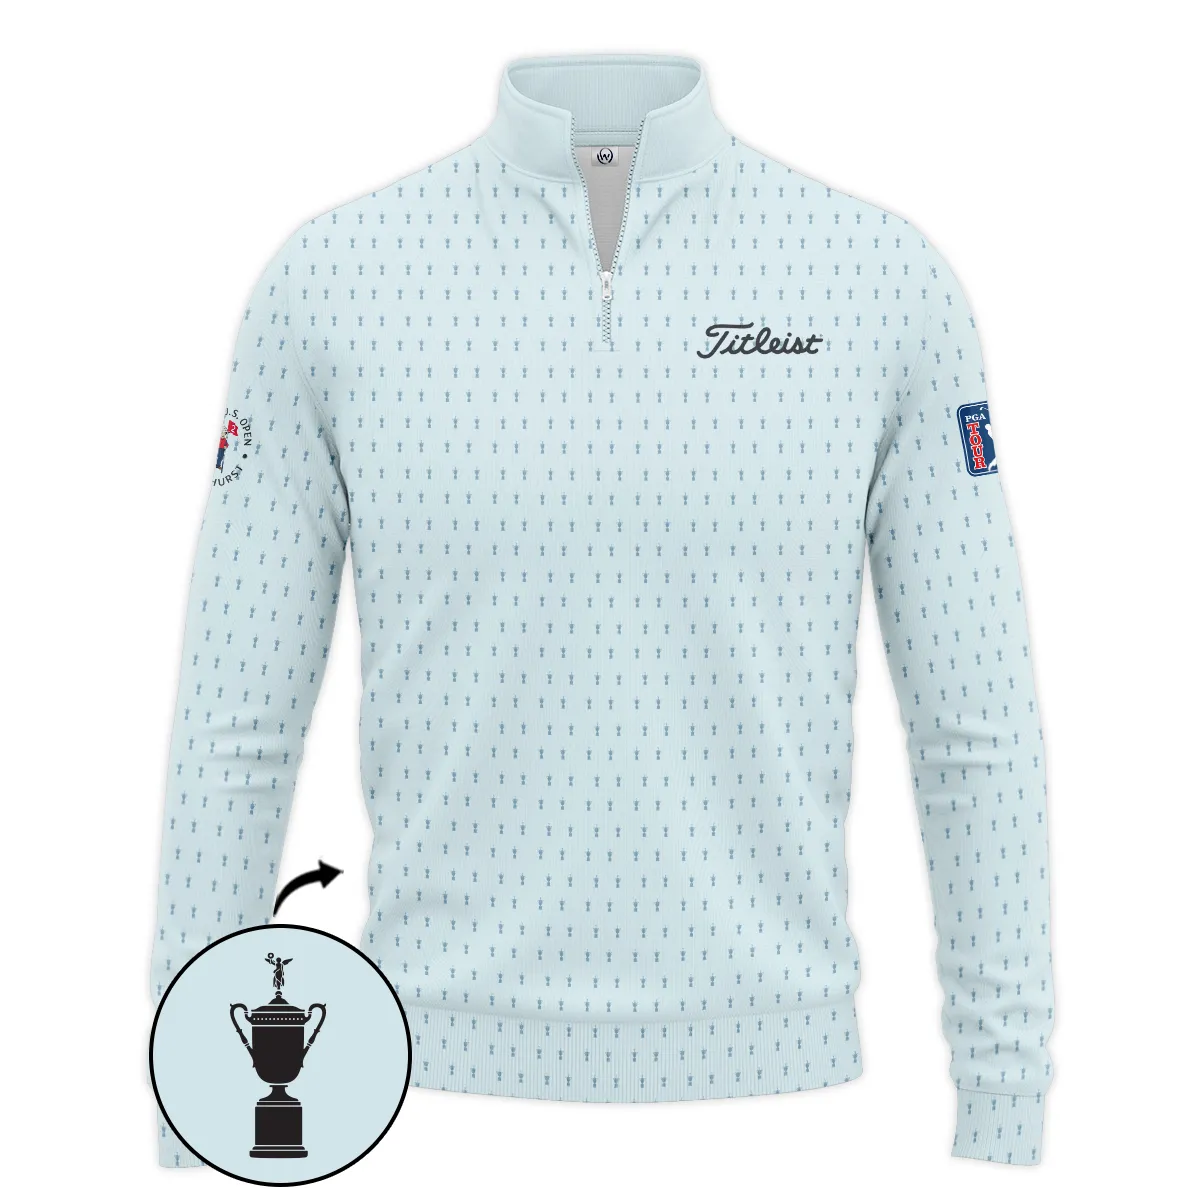 Golf Pattern Cup Light Blue Mix Green 124th U.S. Open Pinehurst Pinehurst Titleist Sleeveless Jacket Style Classic